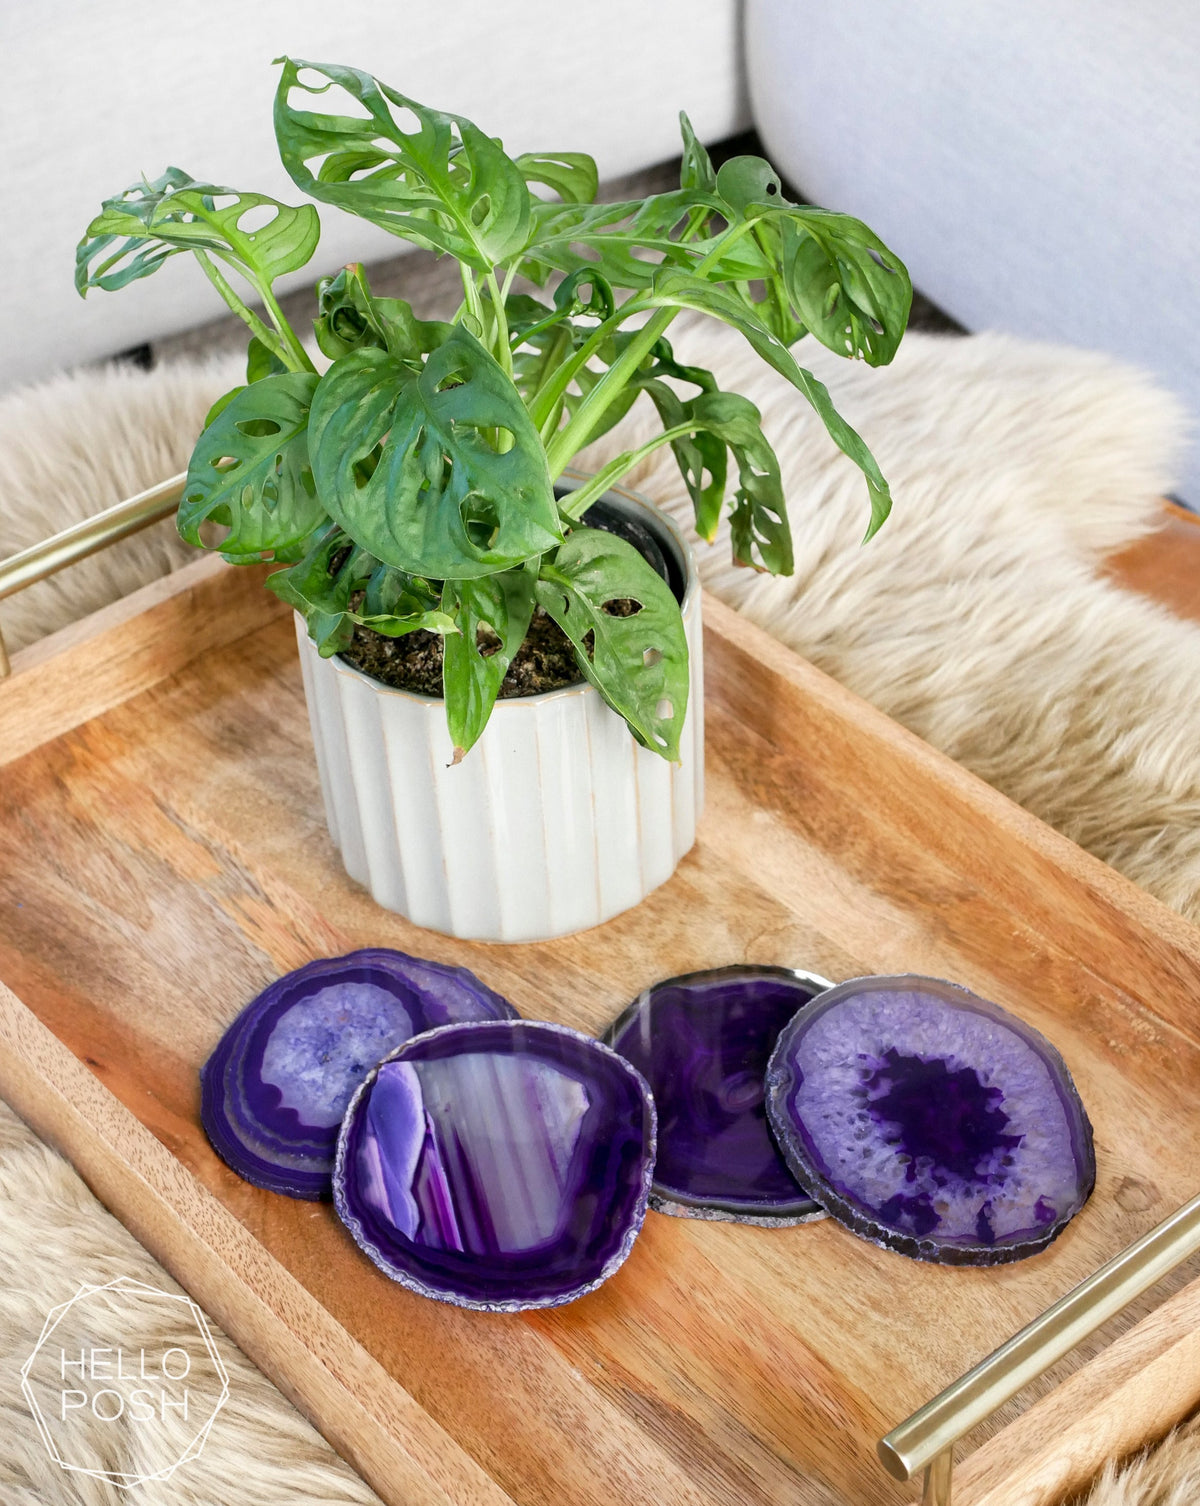 Purple Agate Coaster Set. Plated rim